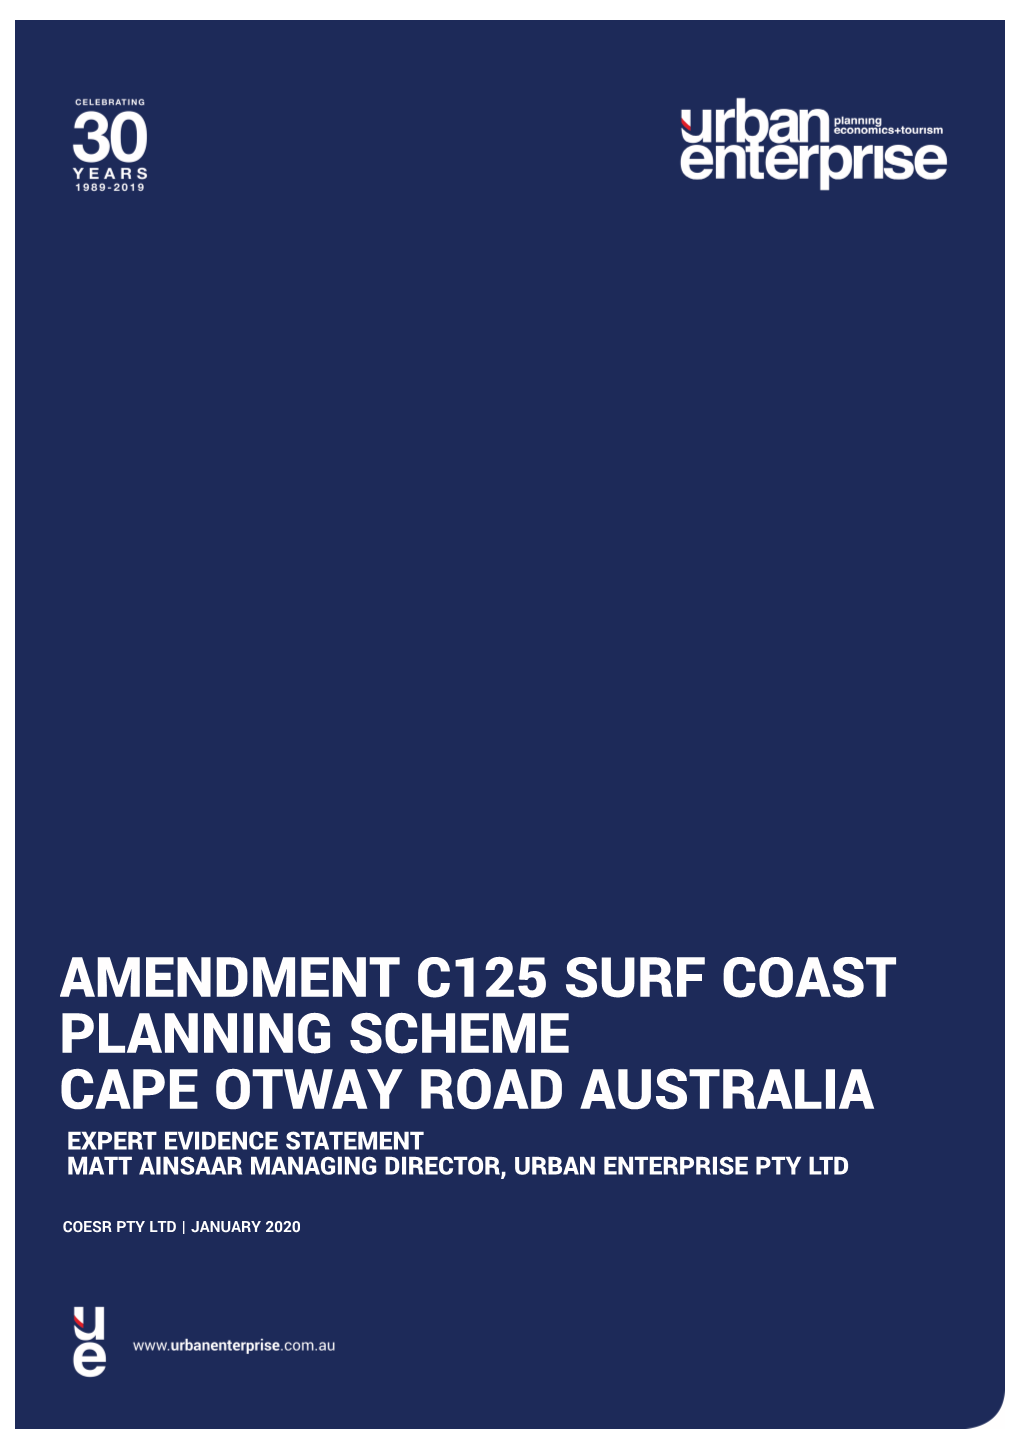 Amendment C125 Surf Coast Planning Scheme Cape Otway Road Australia Expert Evidence Statement Matt Ainsaar Managing Director, Urban Enterprise Pty Ltd